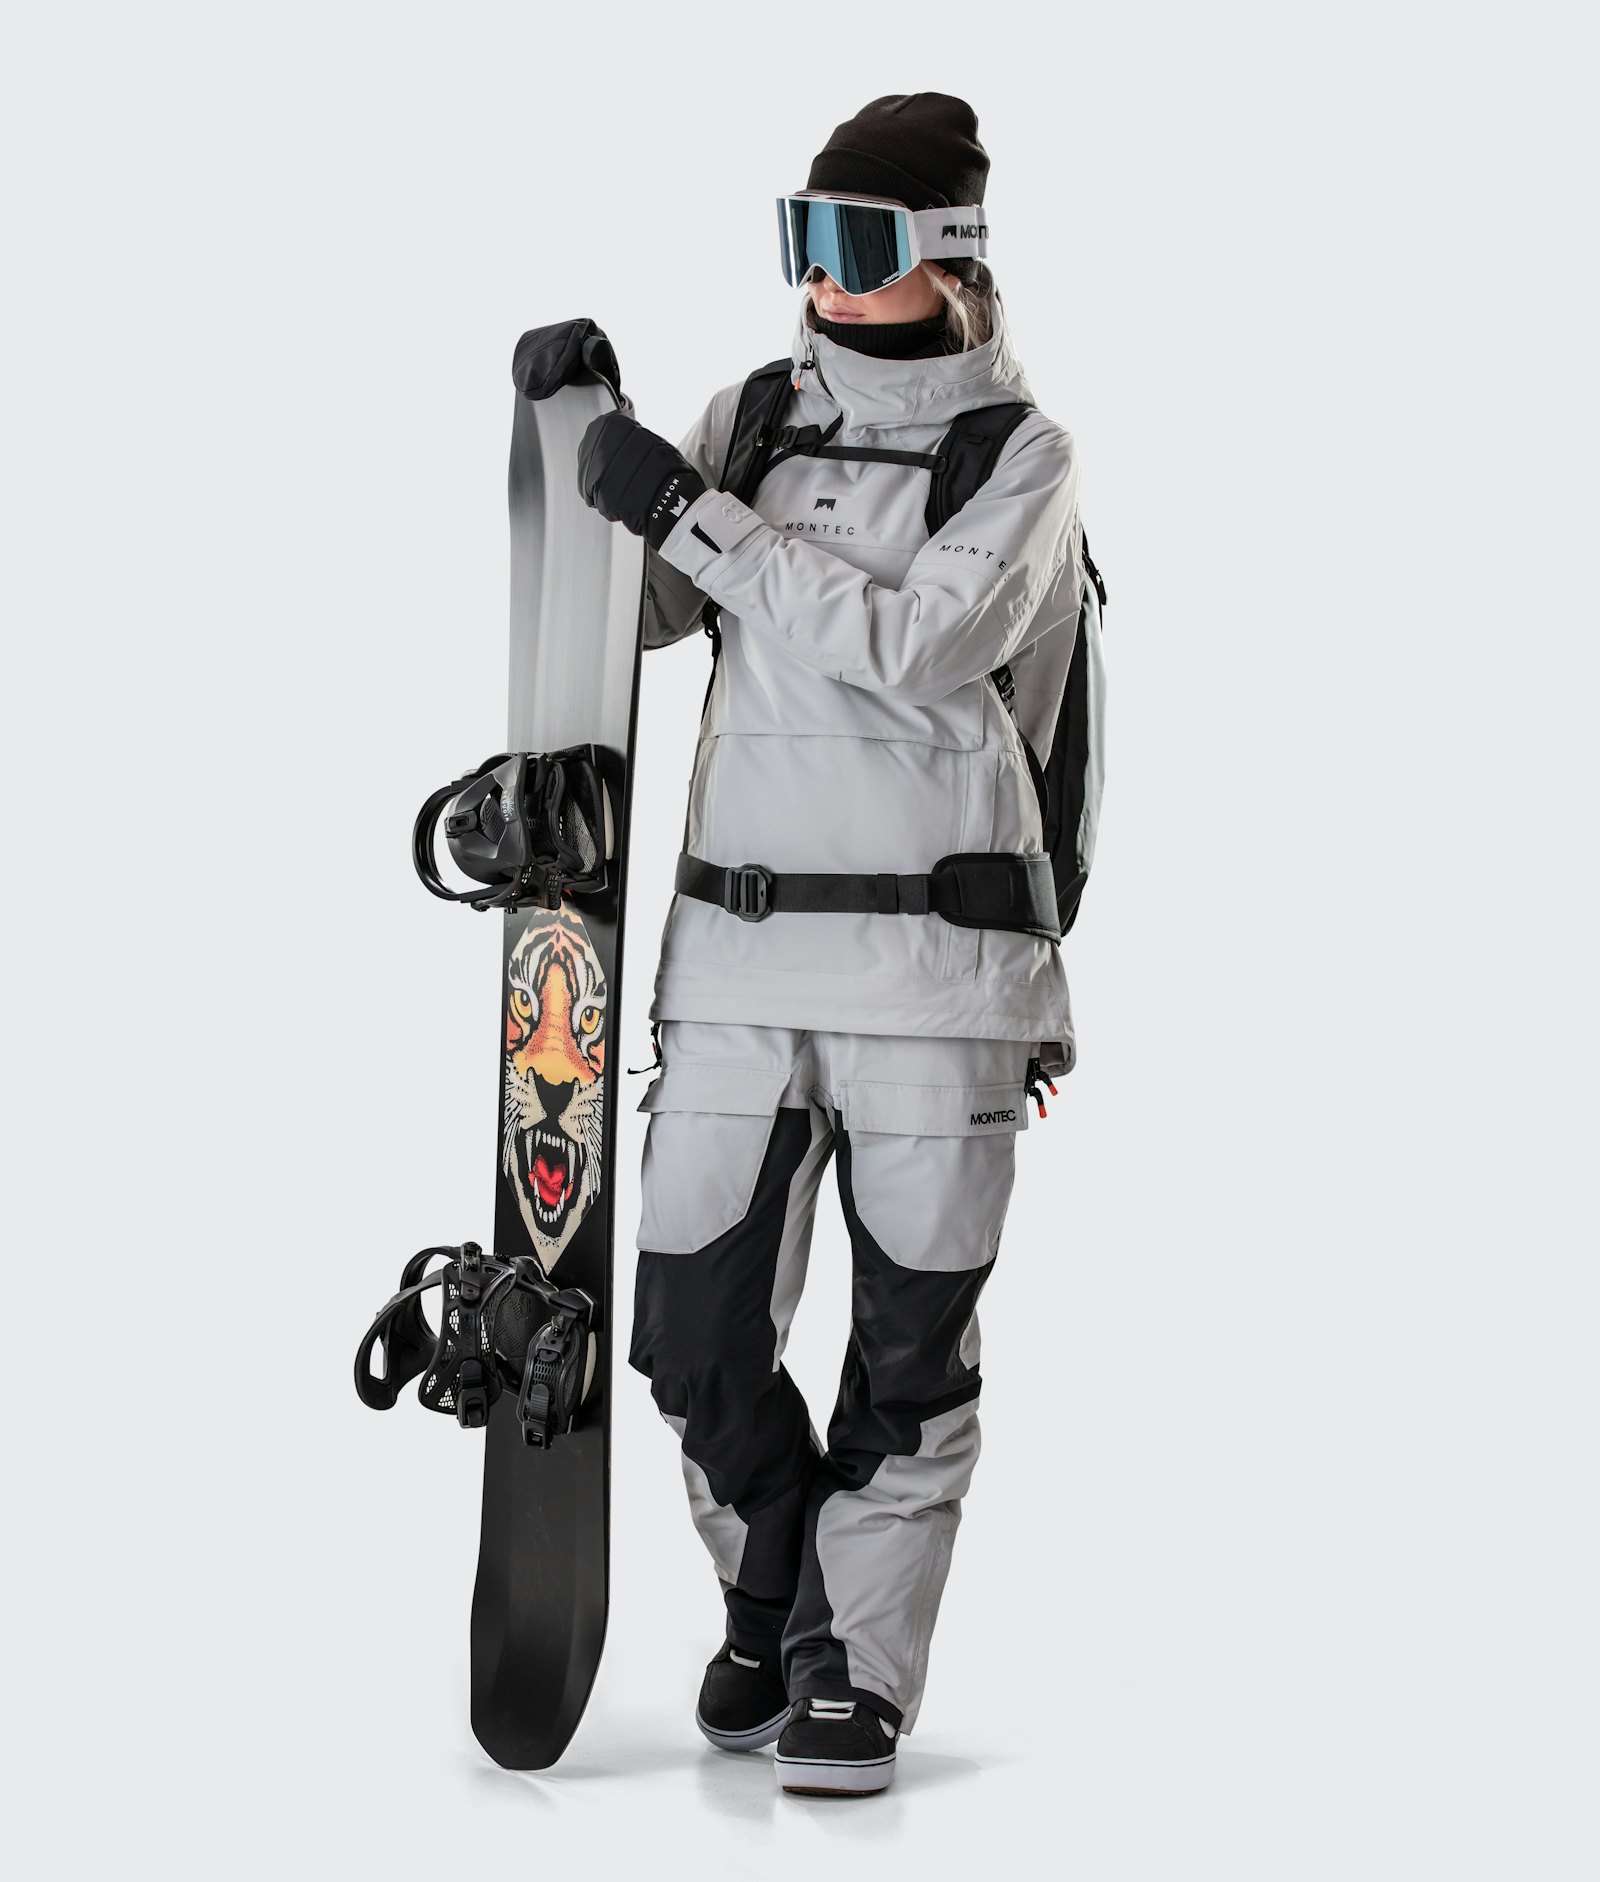 Dune W 2020 Snowboard Jacket Women Light Grey